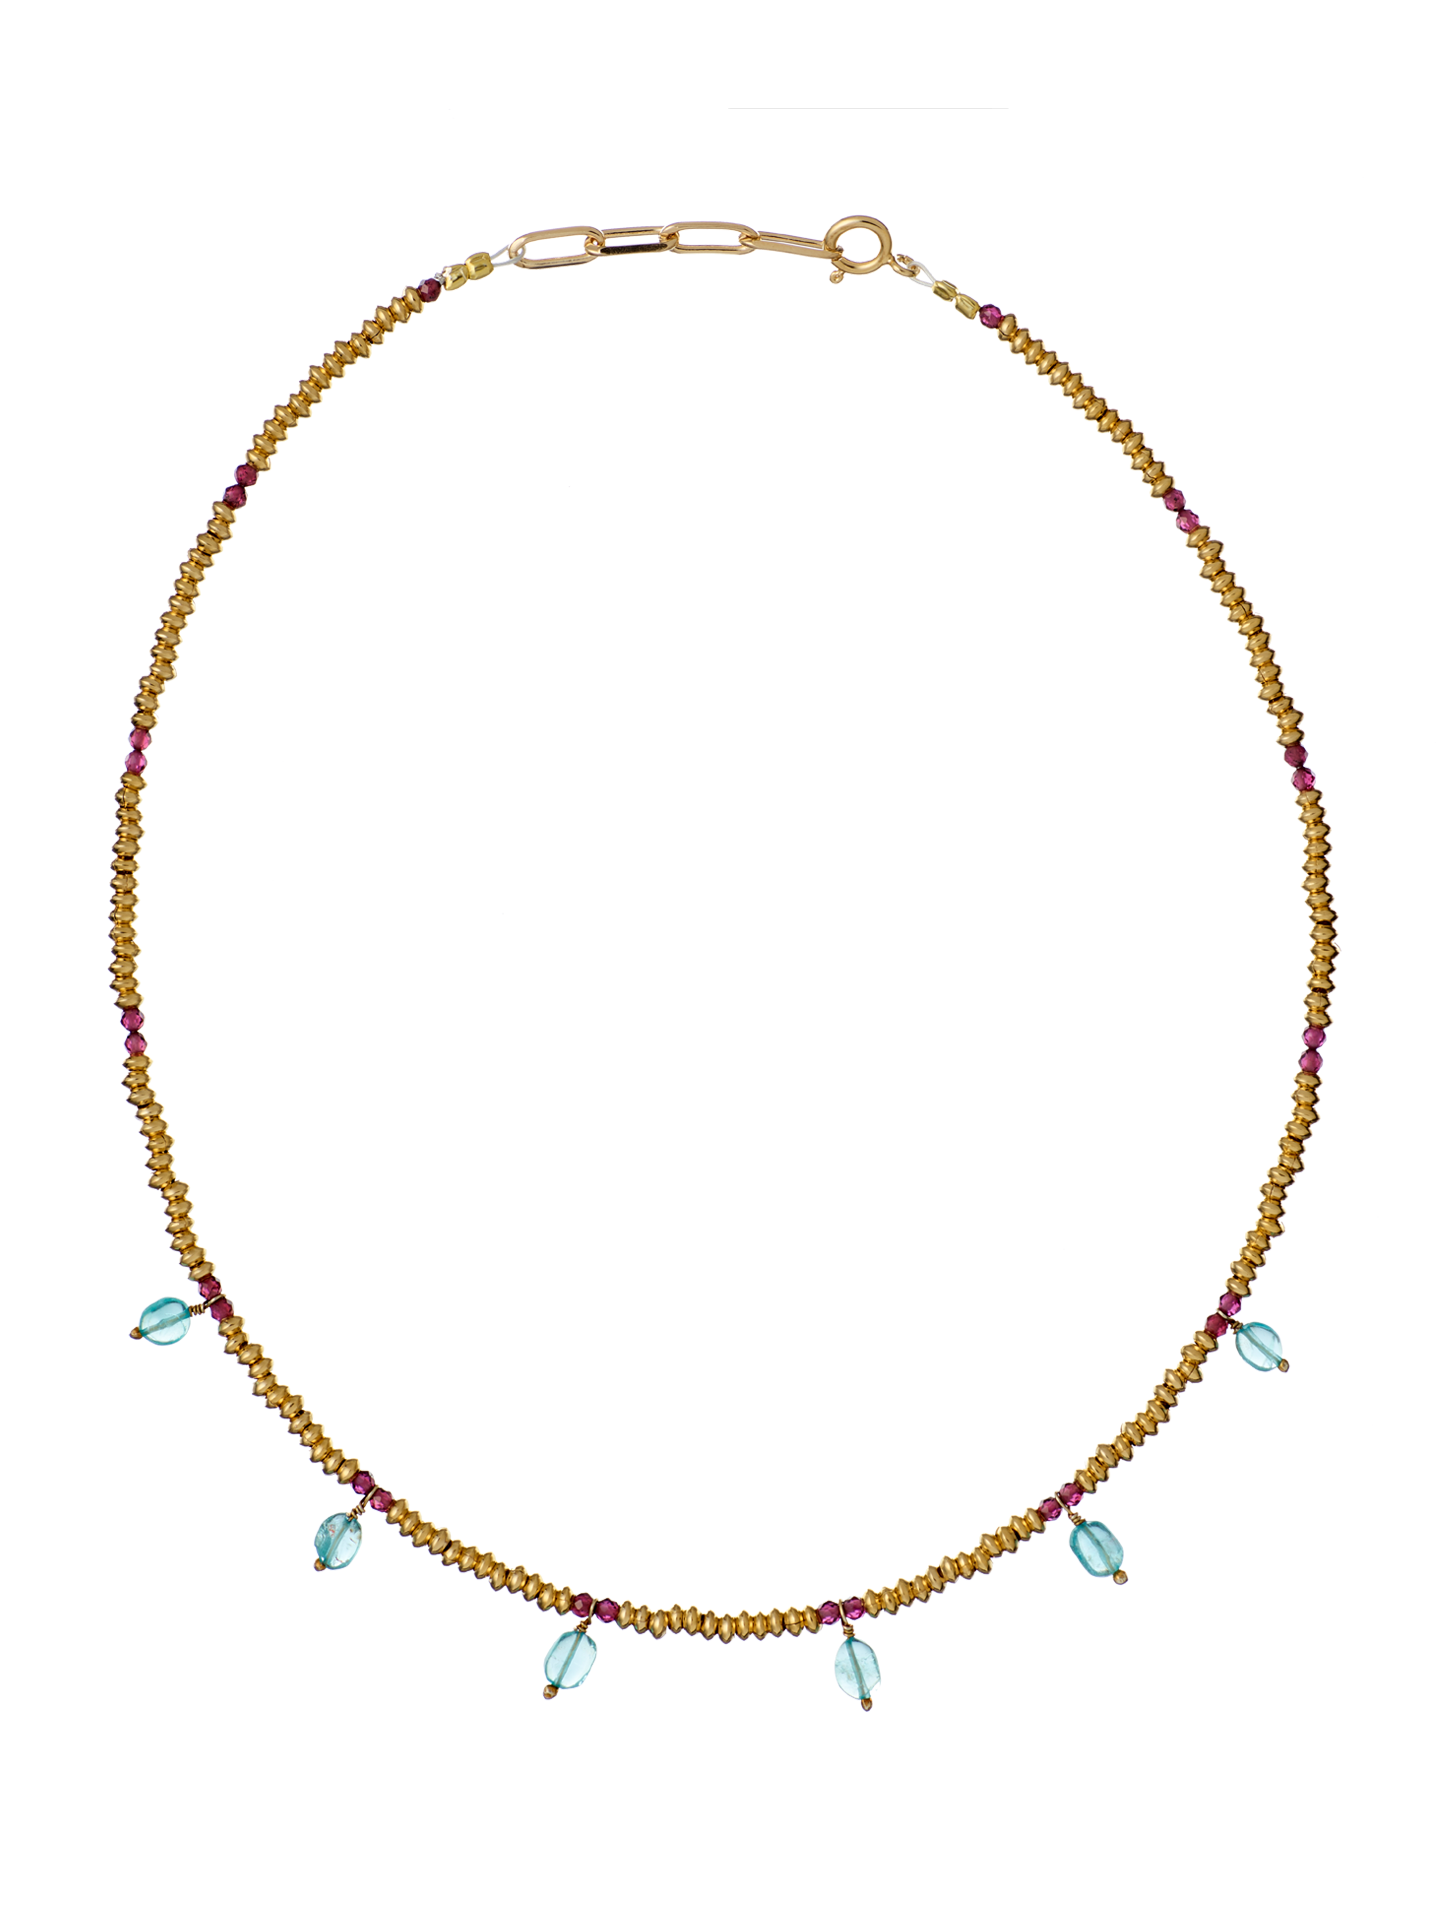 Apatan necklace